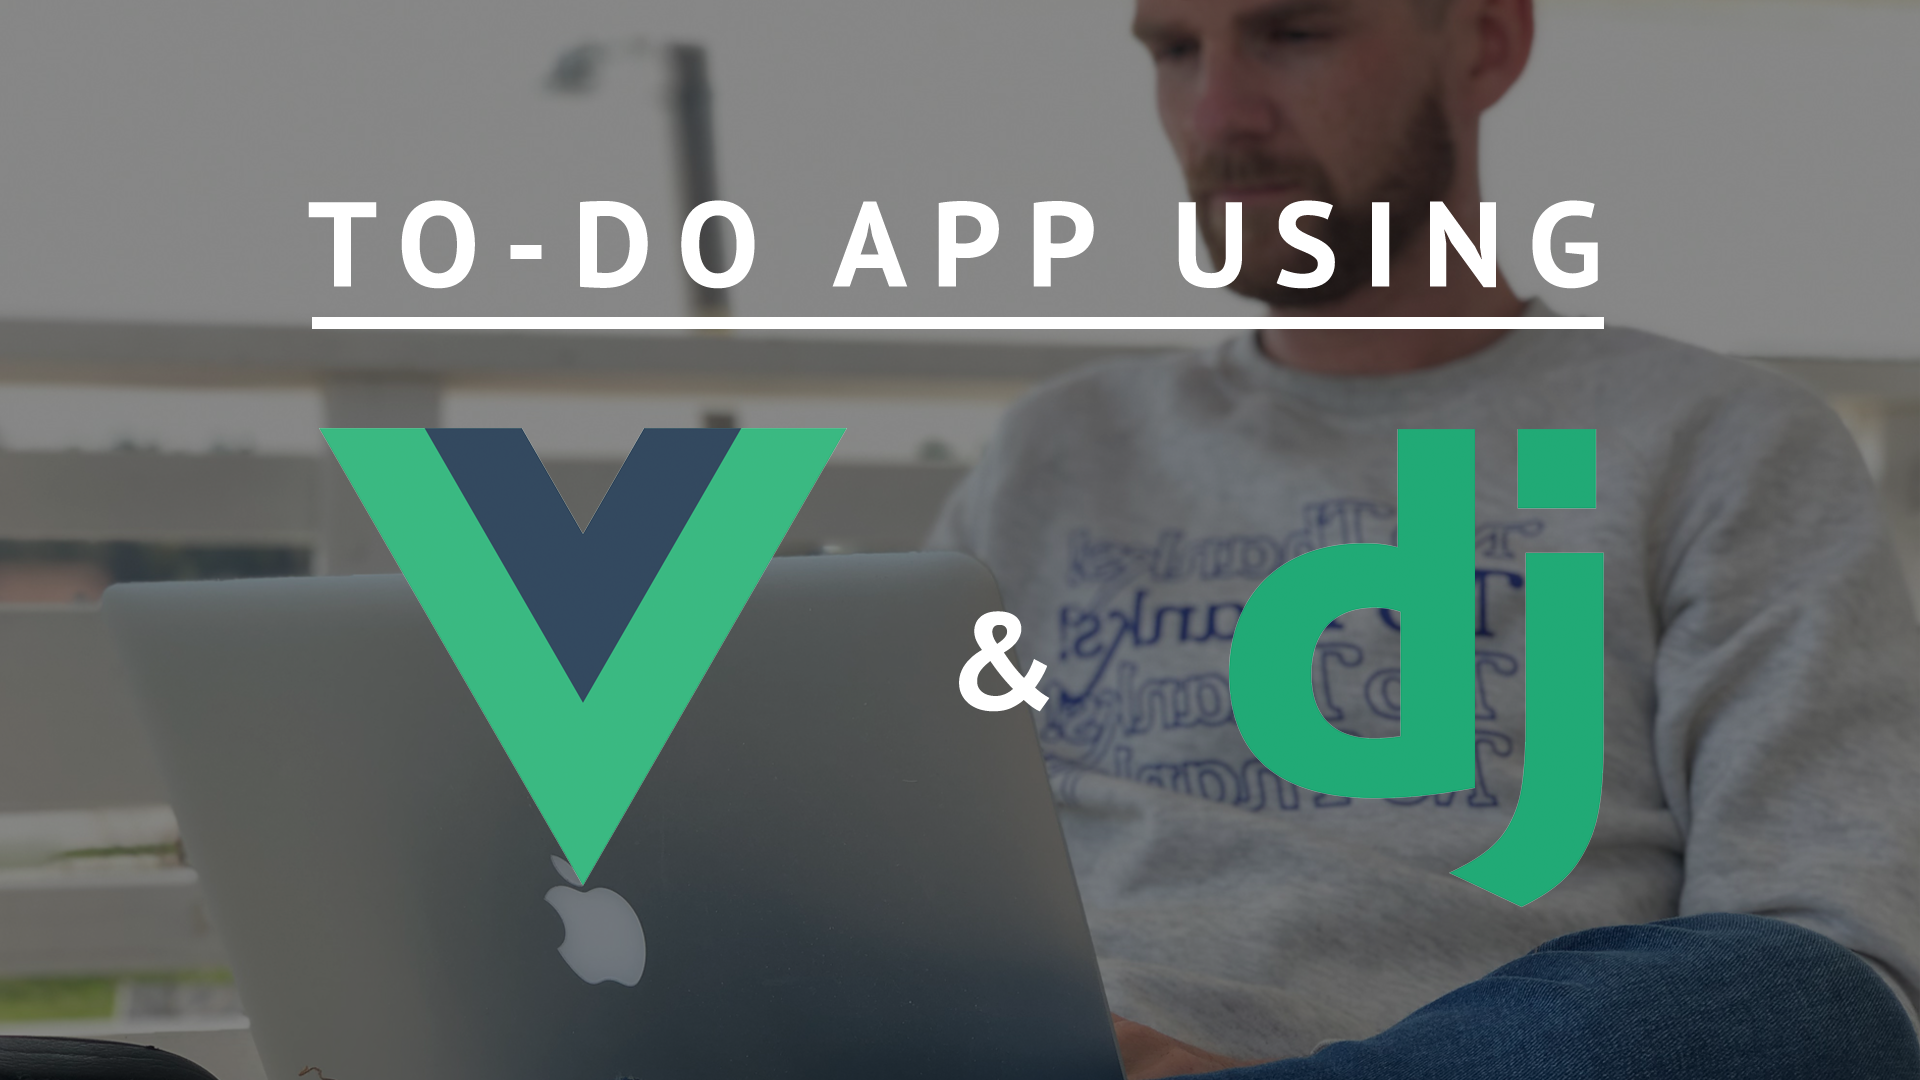 Building a todo app using Vue and Django (Django rest framework)